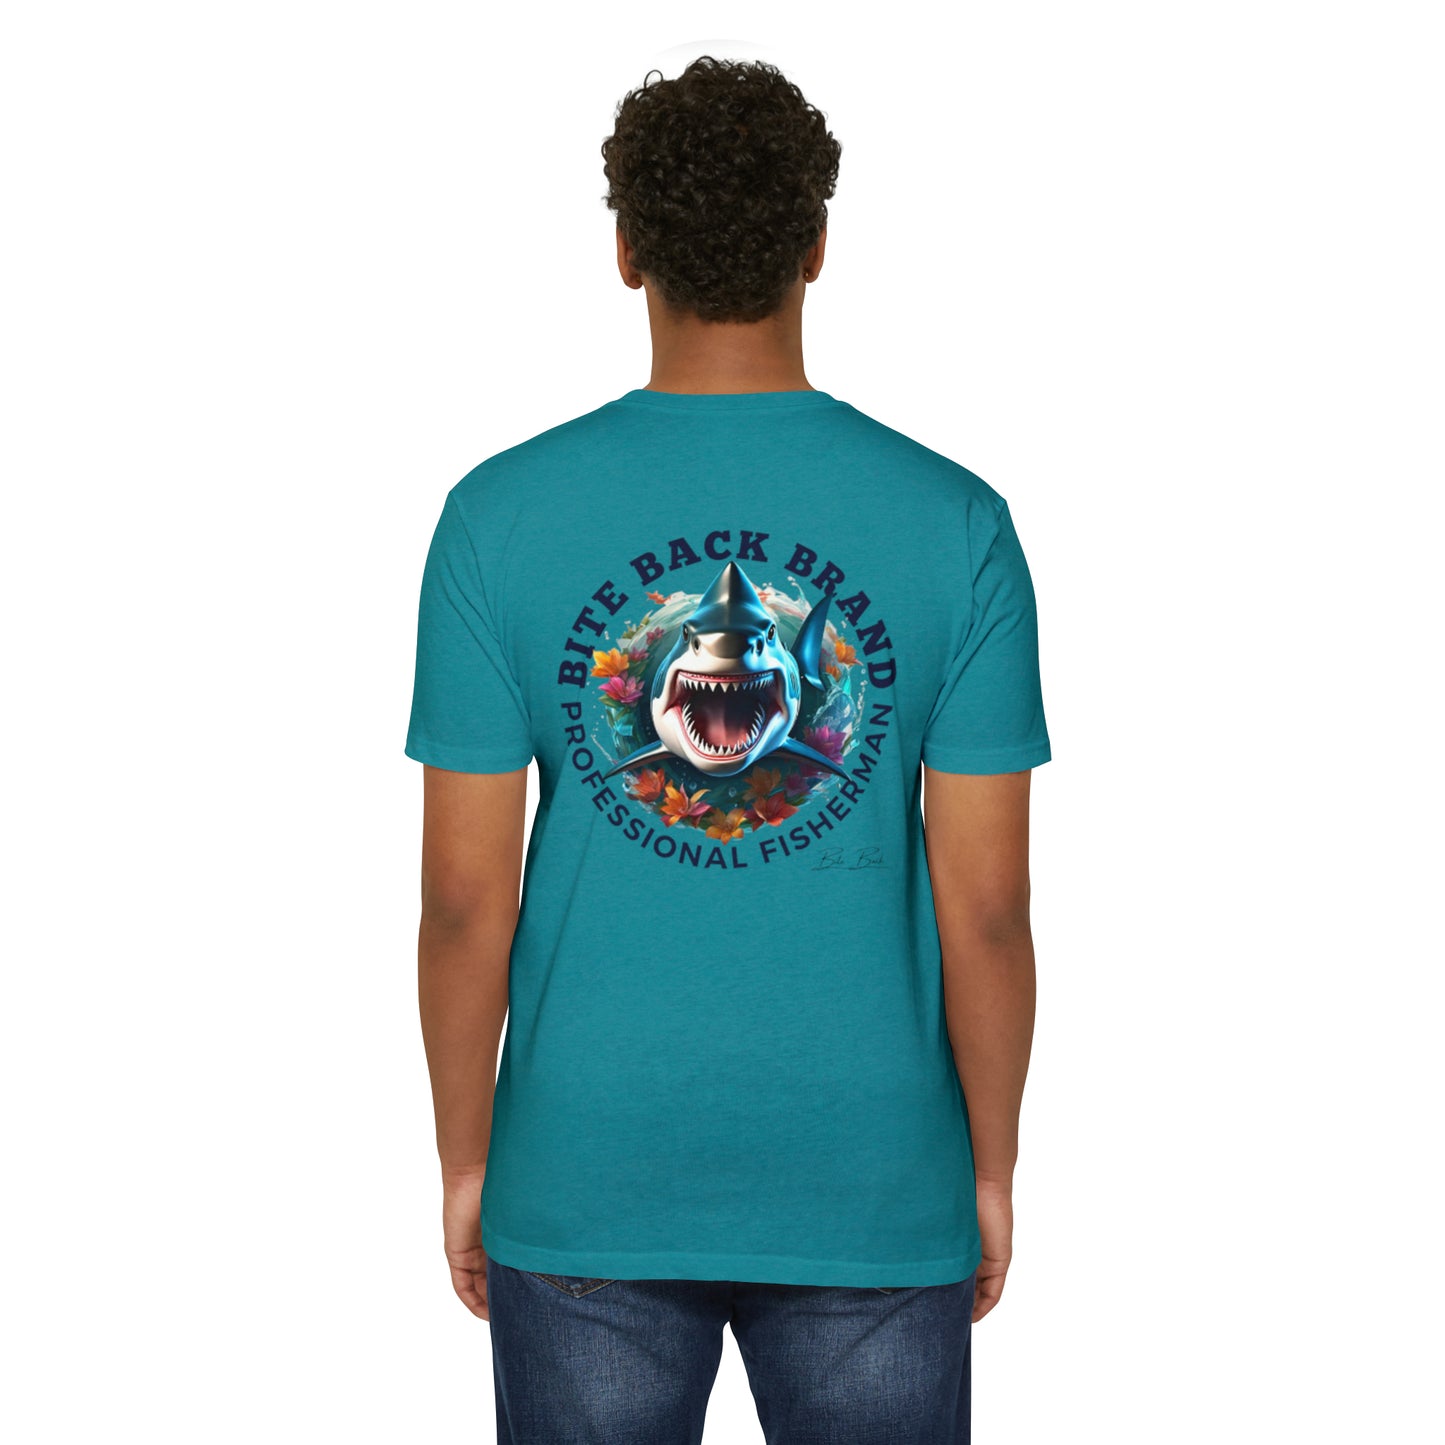 Professional Fisherman T-shirt